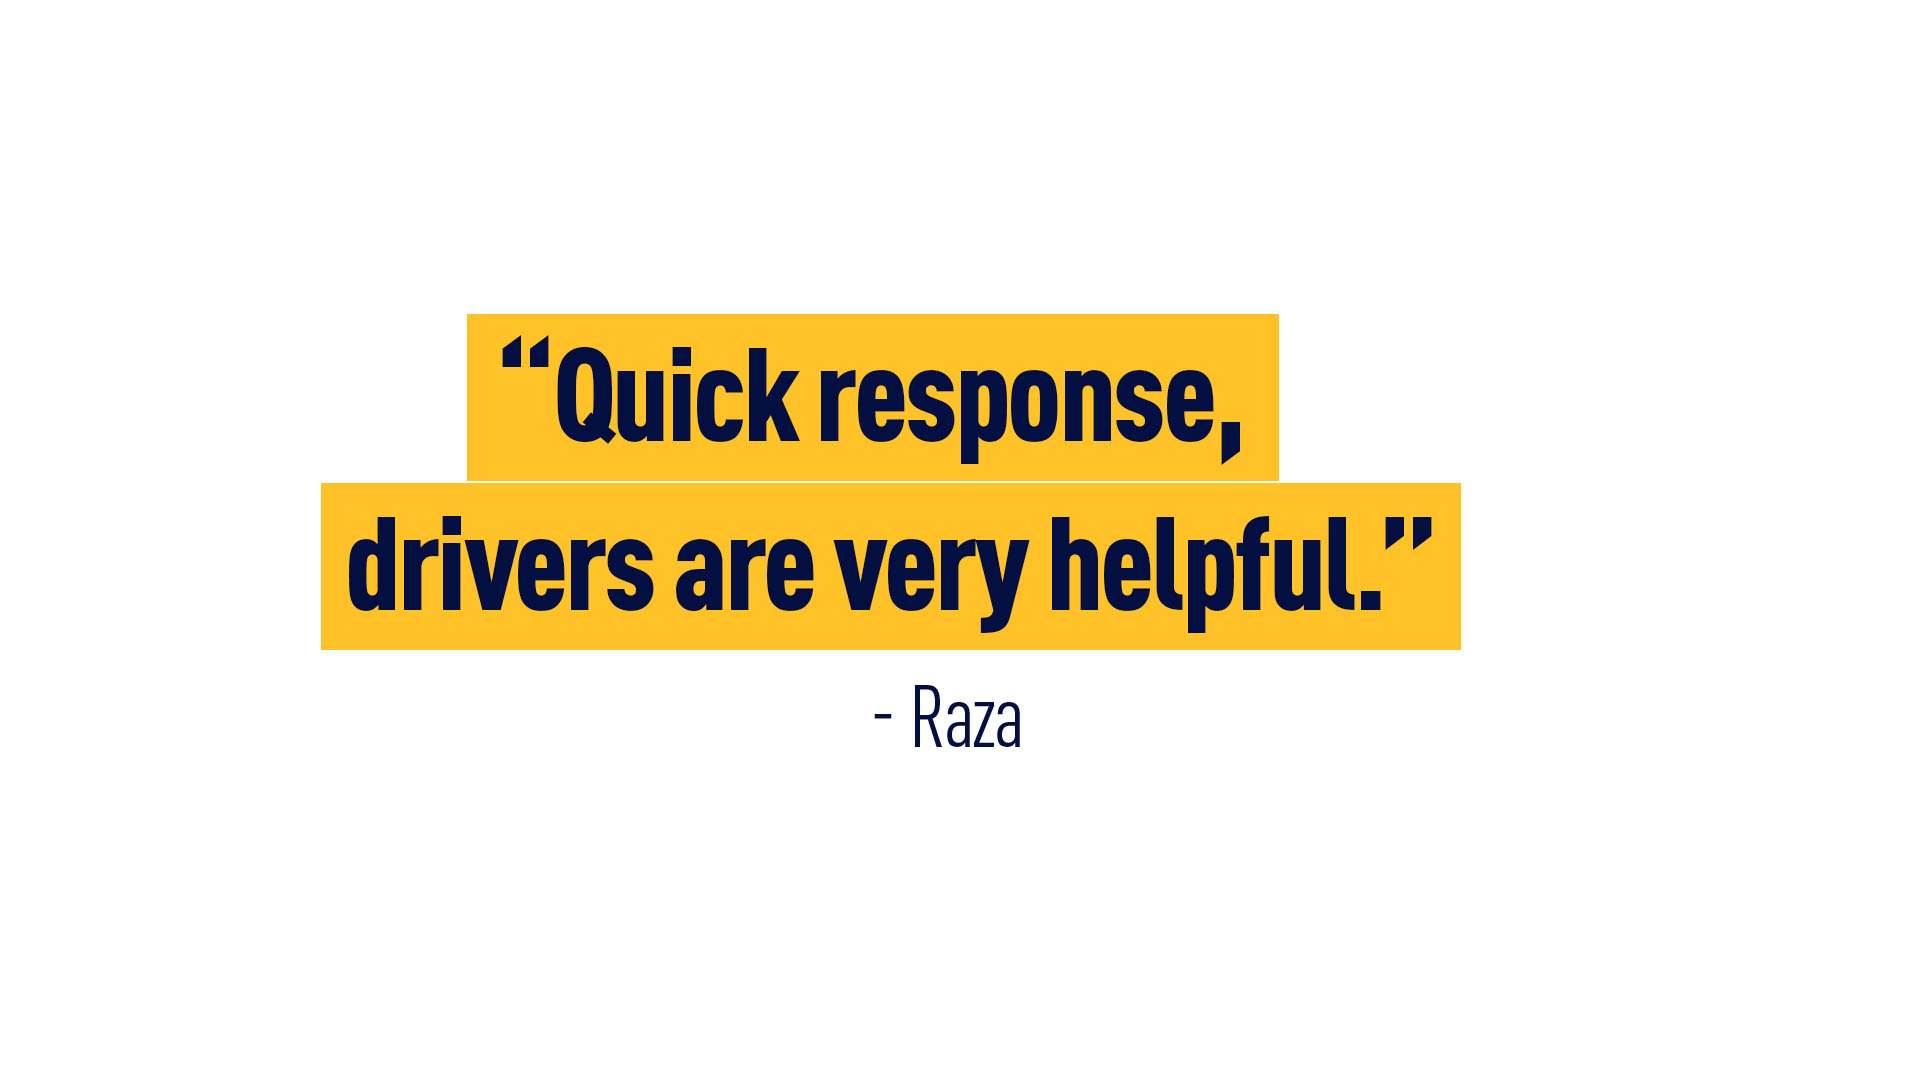 4. Raza – “Quick response, drivers are very helpful.”